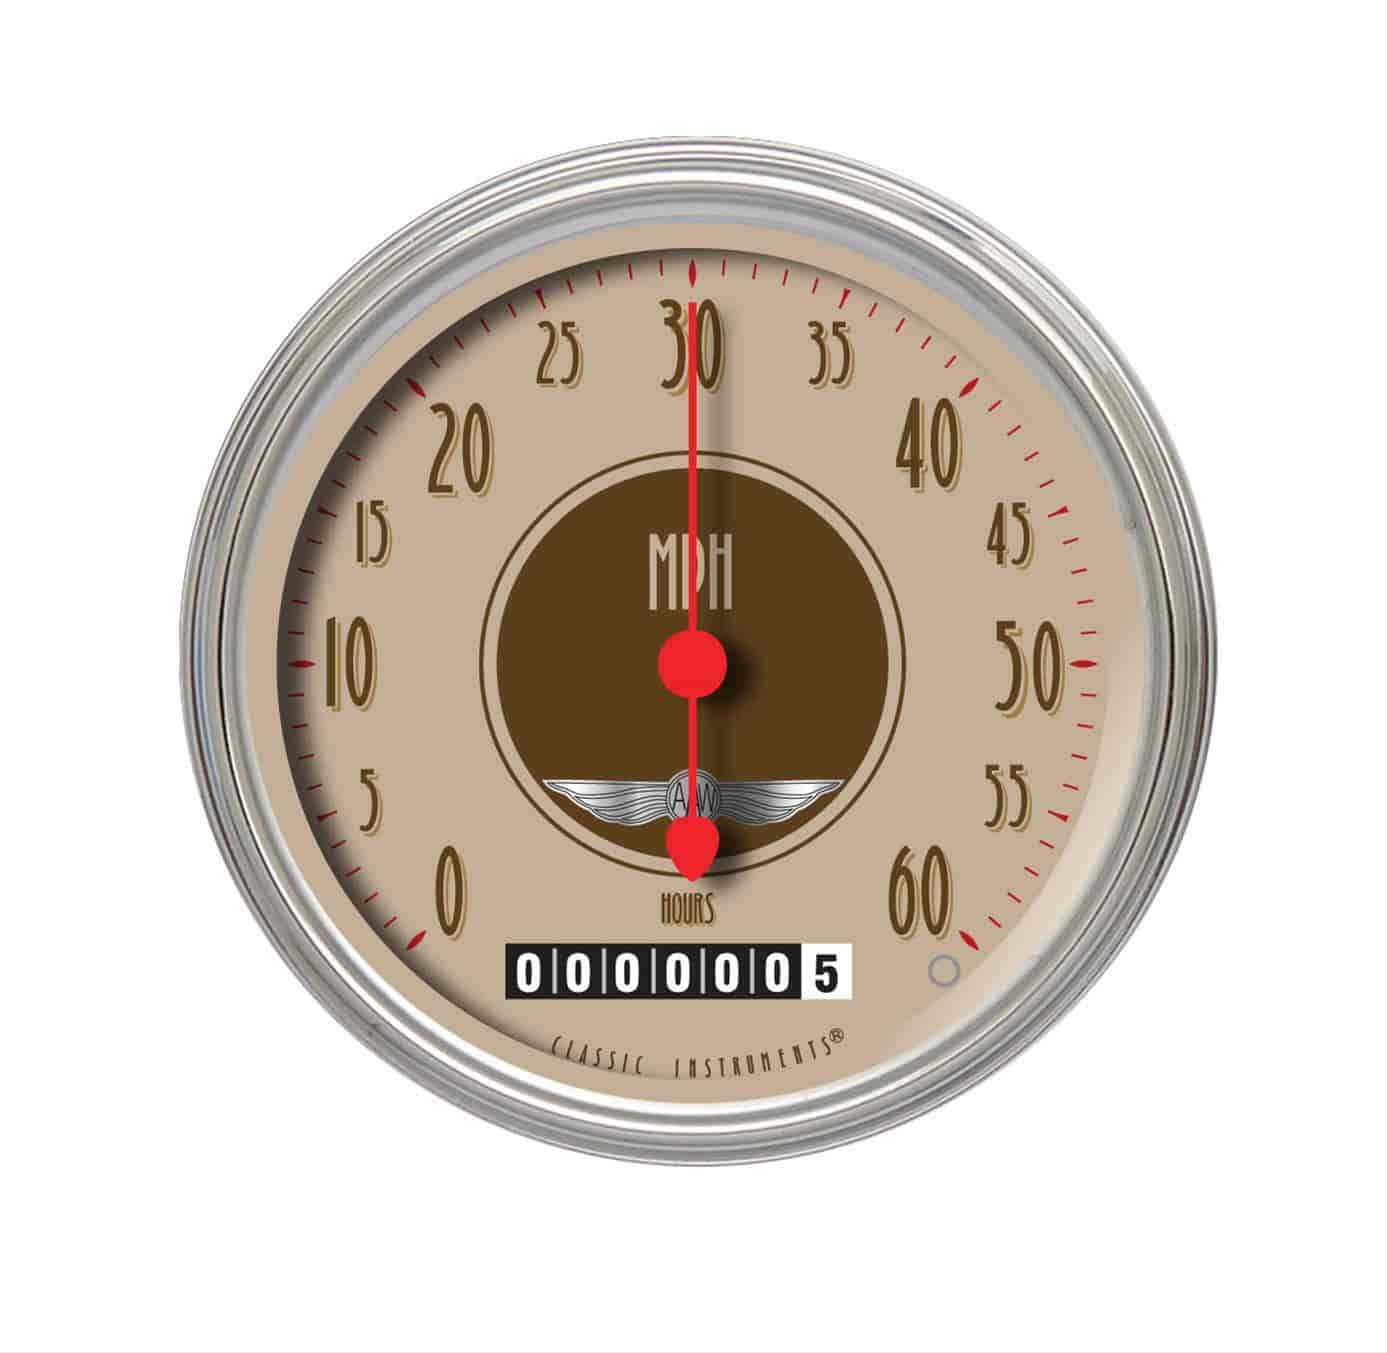 Low Speed Series Speedometer with Hour Meter All American Nickel Style